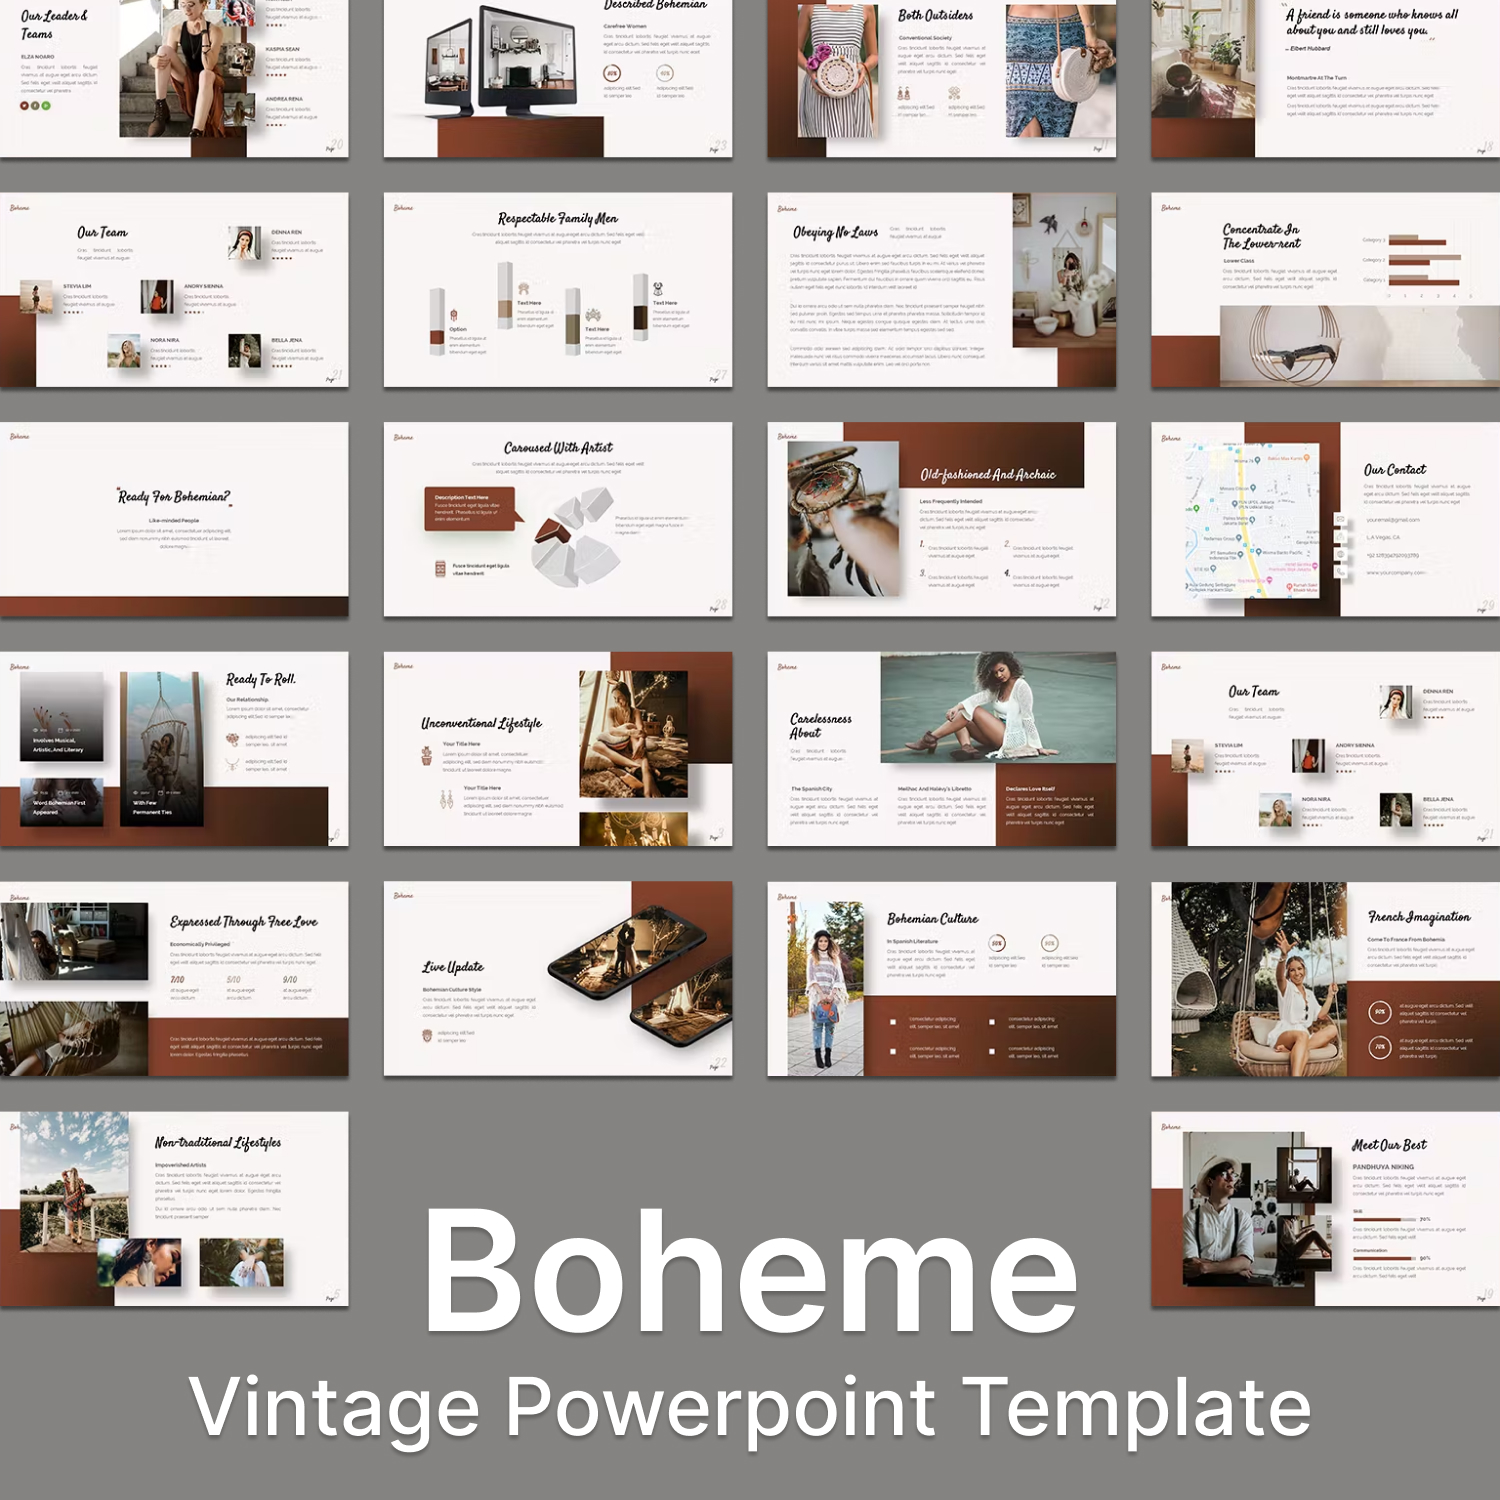 Preview boheme vintage powerpoint template.